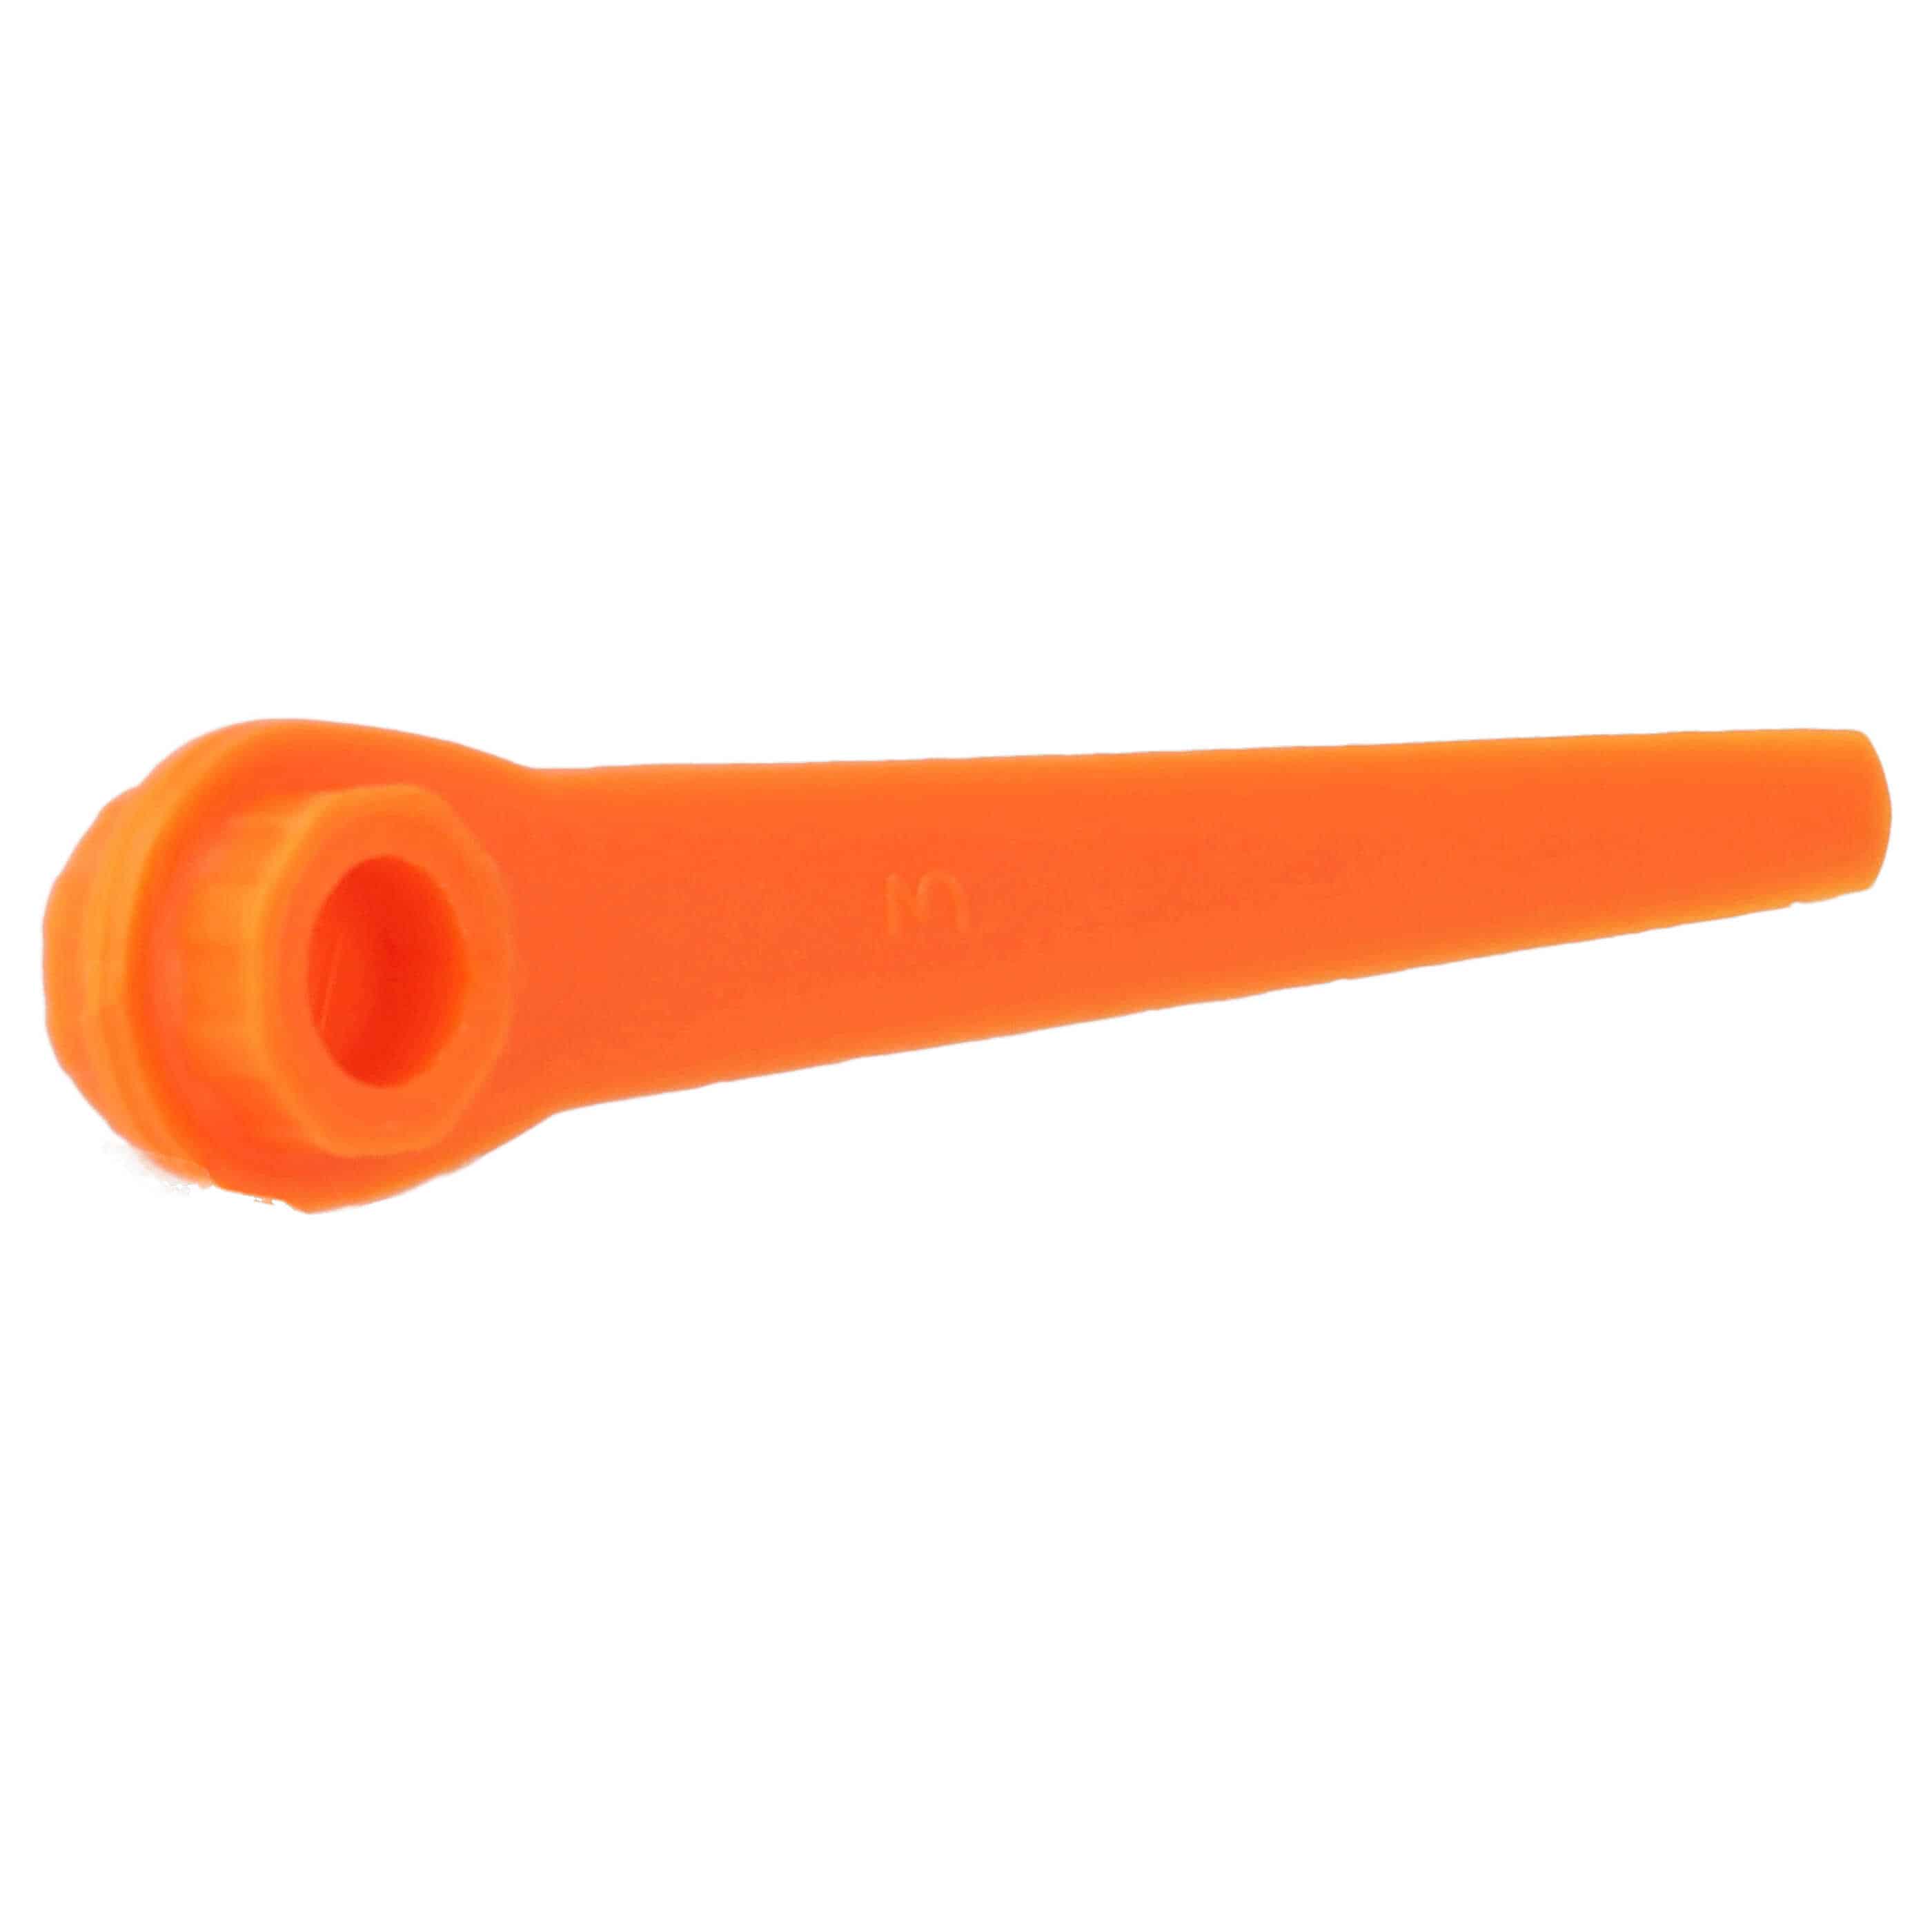 10x Exchange Blade replaces Gardena RotorCut 5368-20 for Cordless Strimmer - plastic, orange